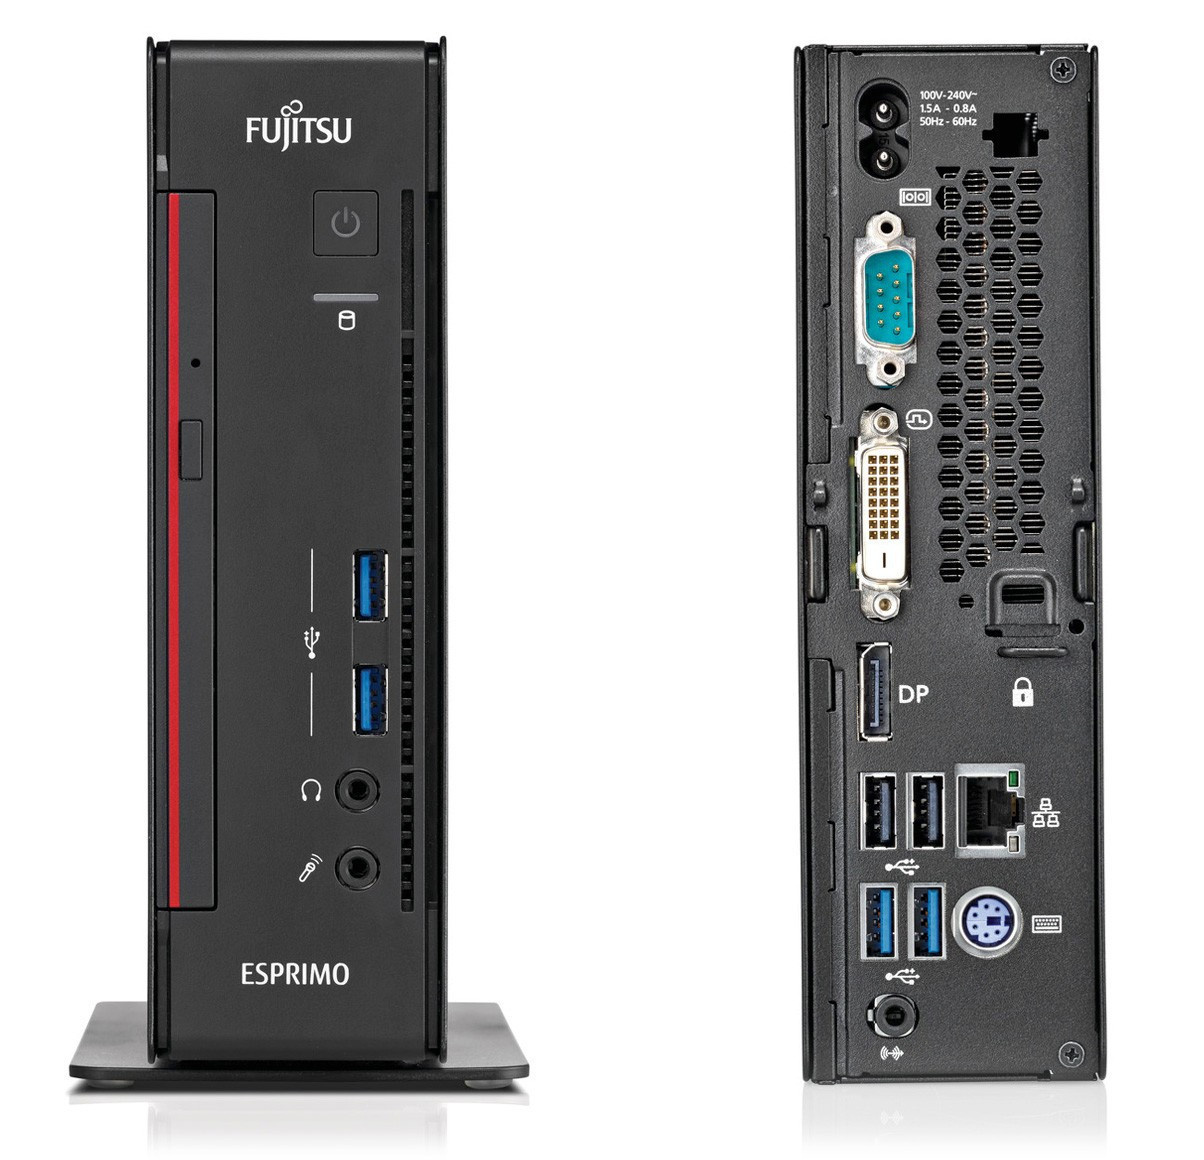 Міні ПК Fujitsu Esprimo Q956 mini PC (Q0956P770PNC) USFF, s1151 БВ